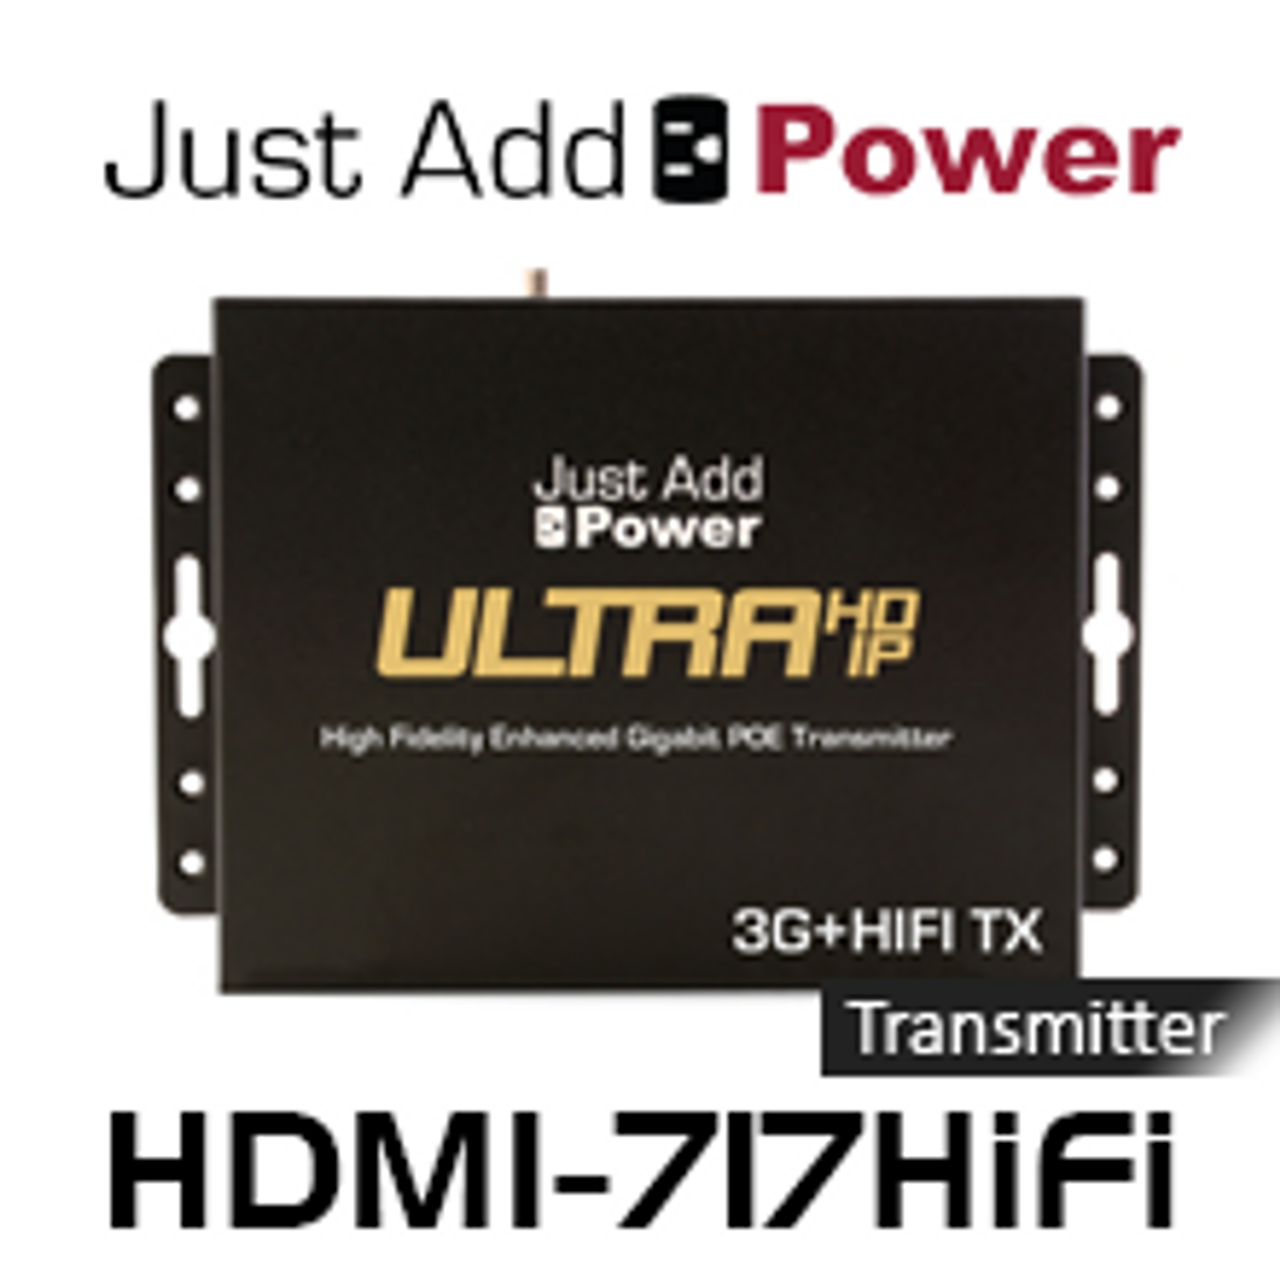 JAP HDMI-717HIFI 3G HIFI Transmitter With Loop Out 4K